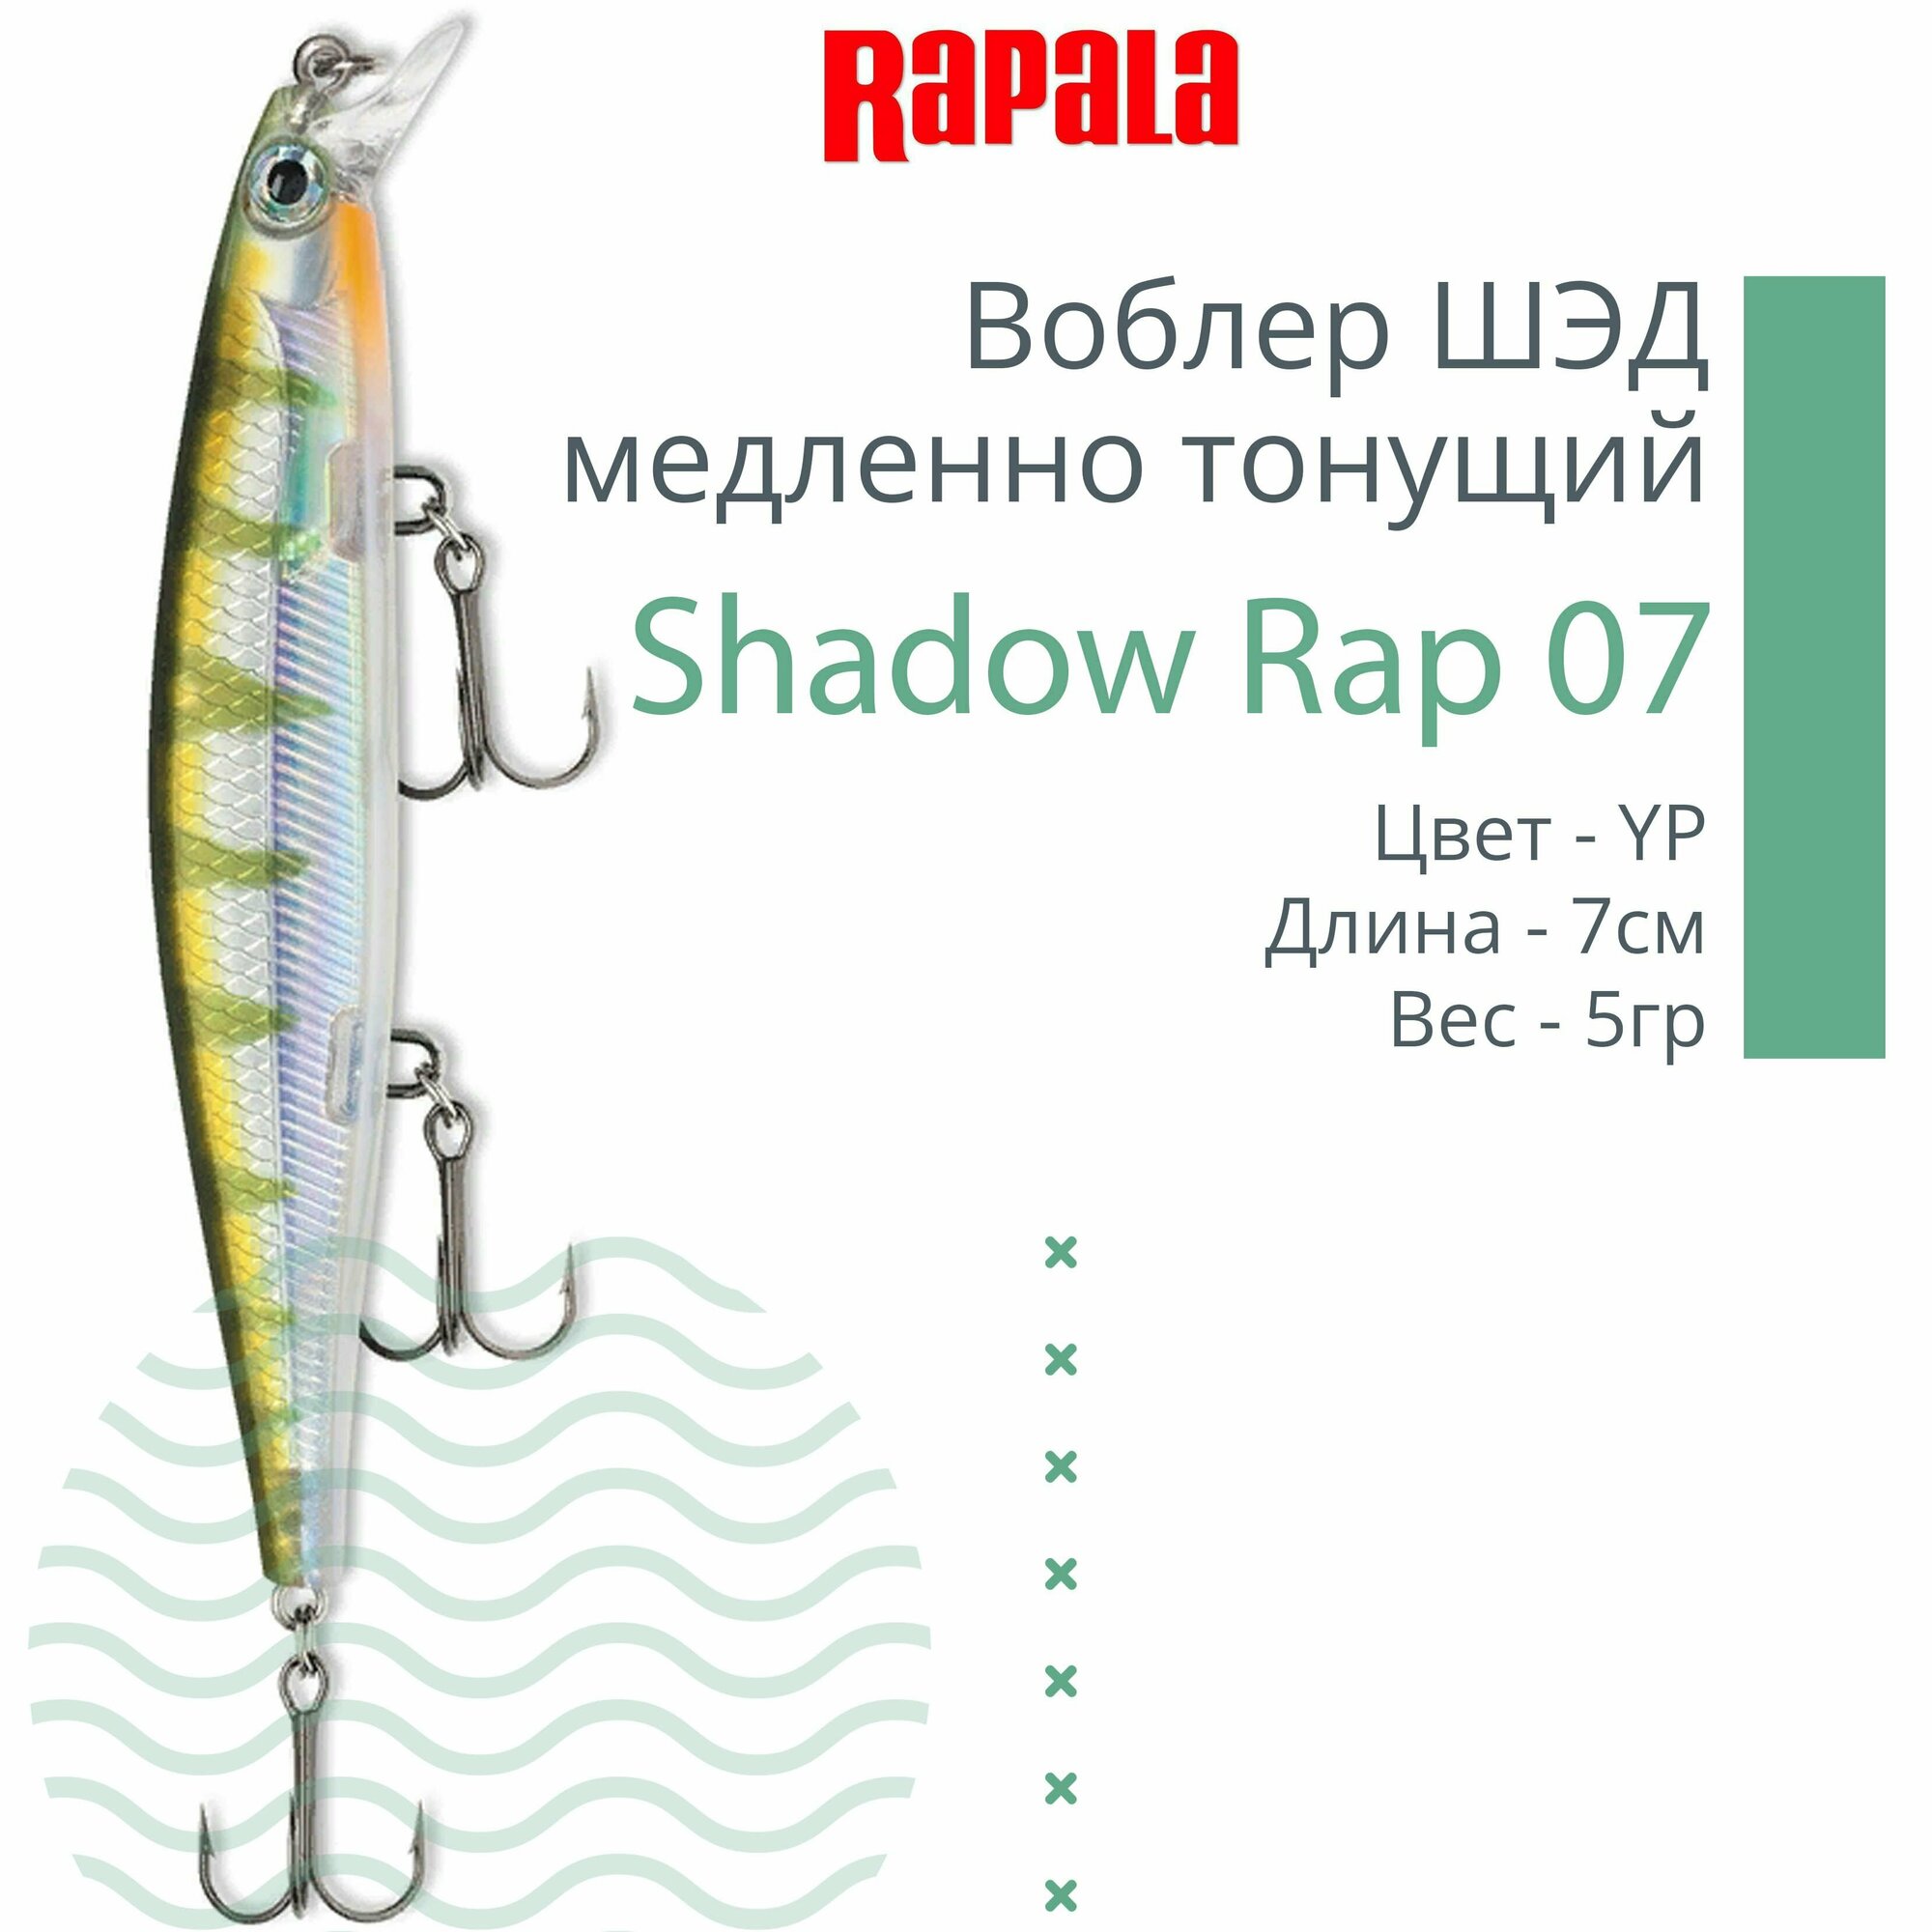 Воблер для рыбалки RAPALA Shadow Rap 07, 7см, 5гр, цвет YP, медленно тонущий